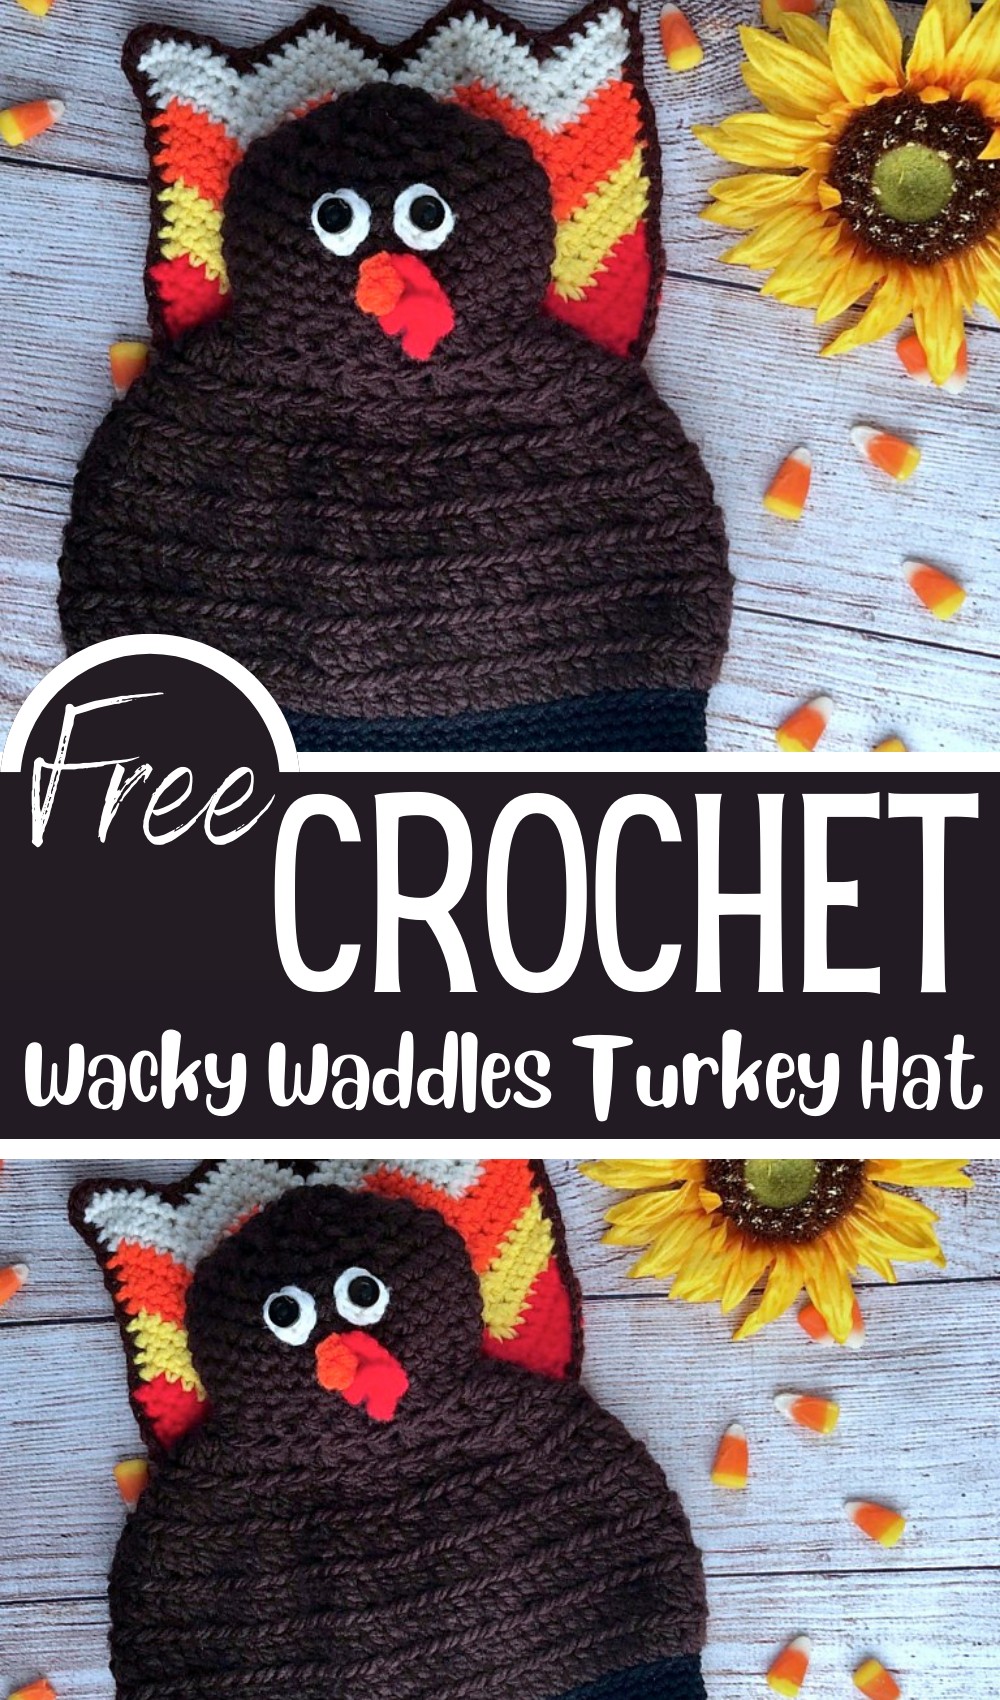 Wacky Waddles Turkey Hat